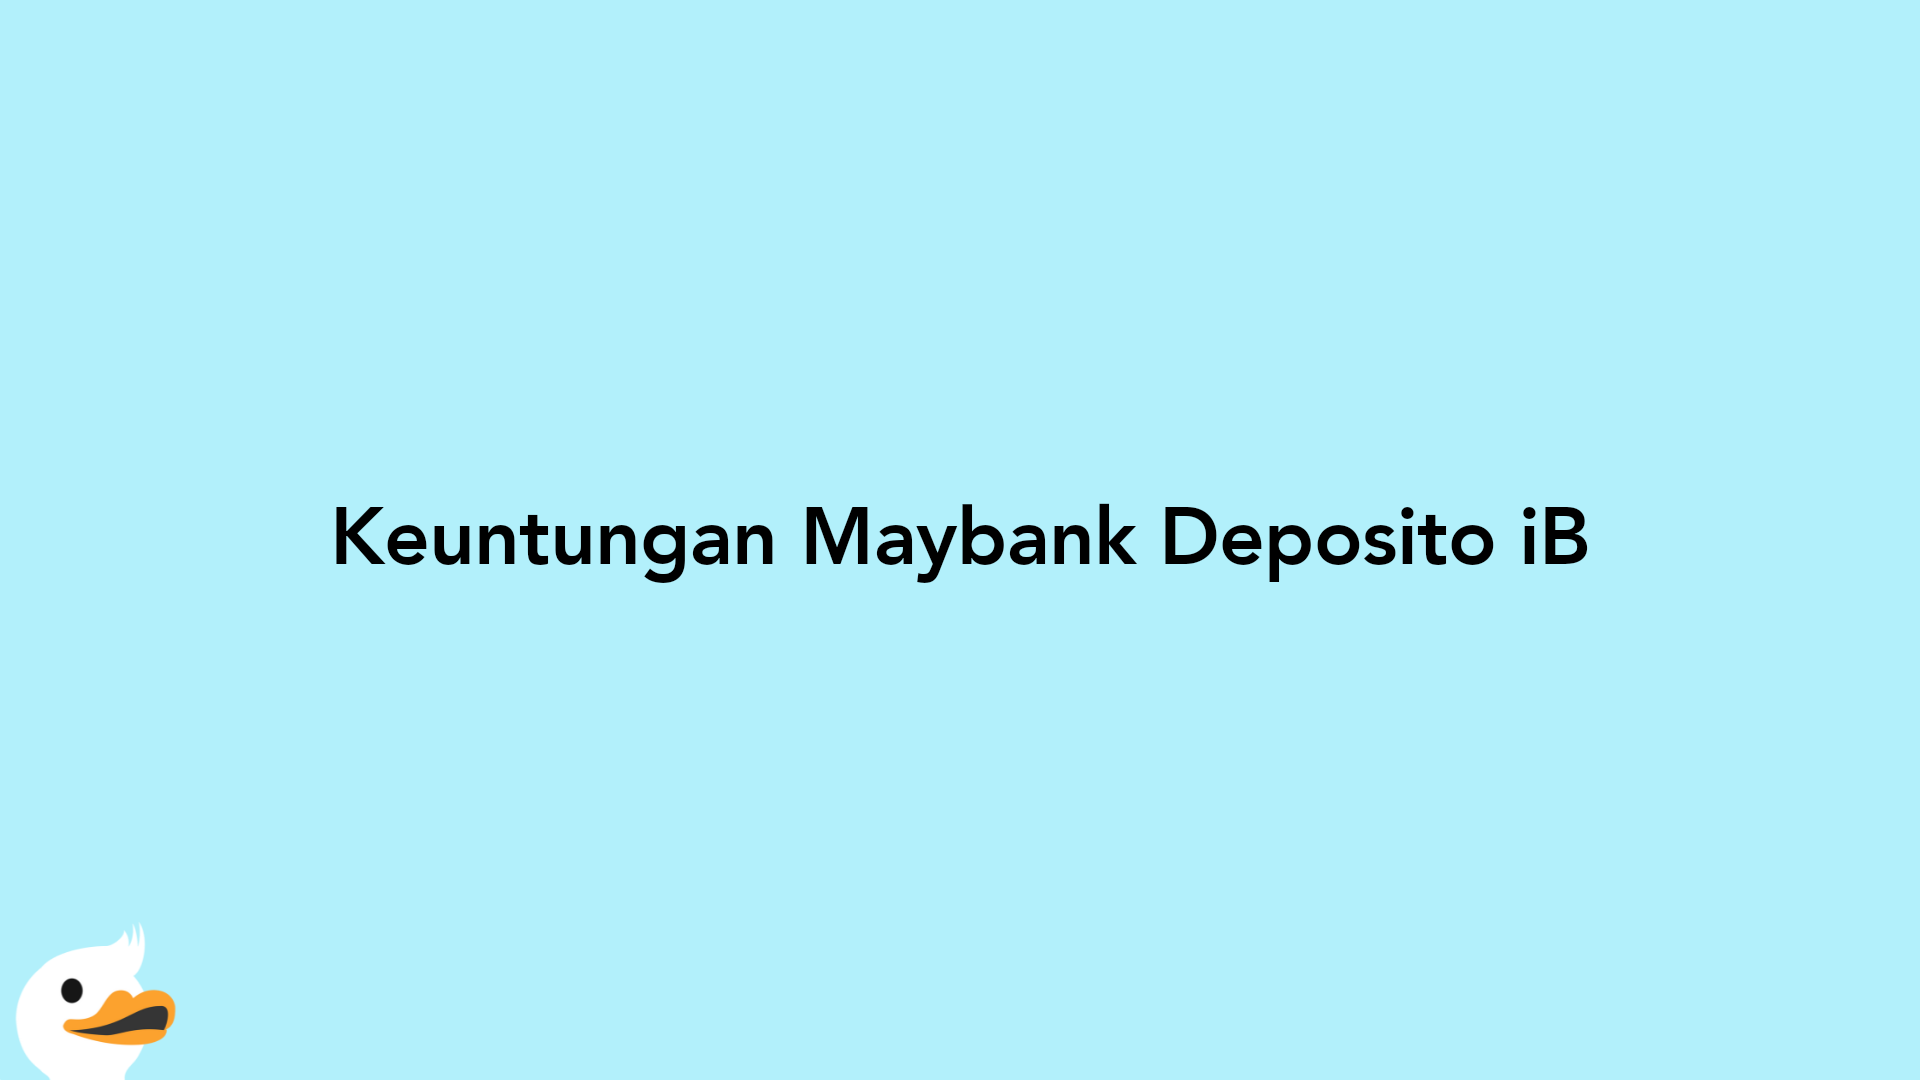 Keuntungan Maybank Deposito iB